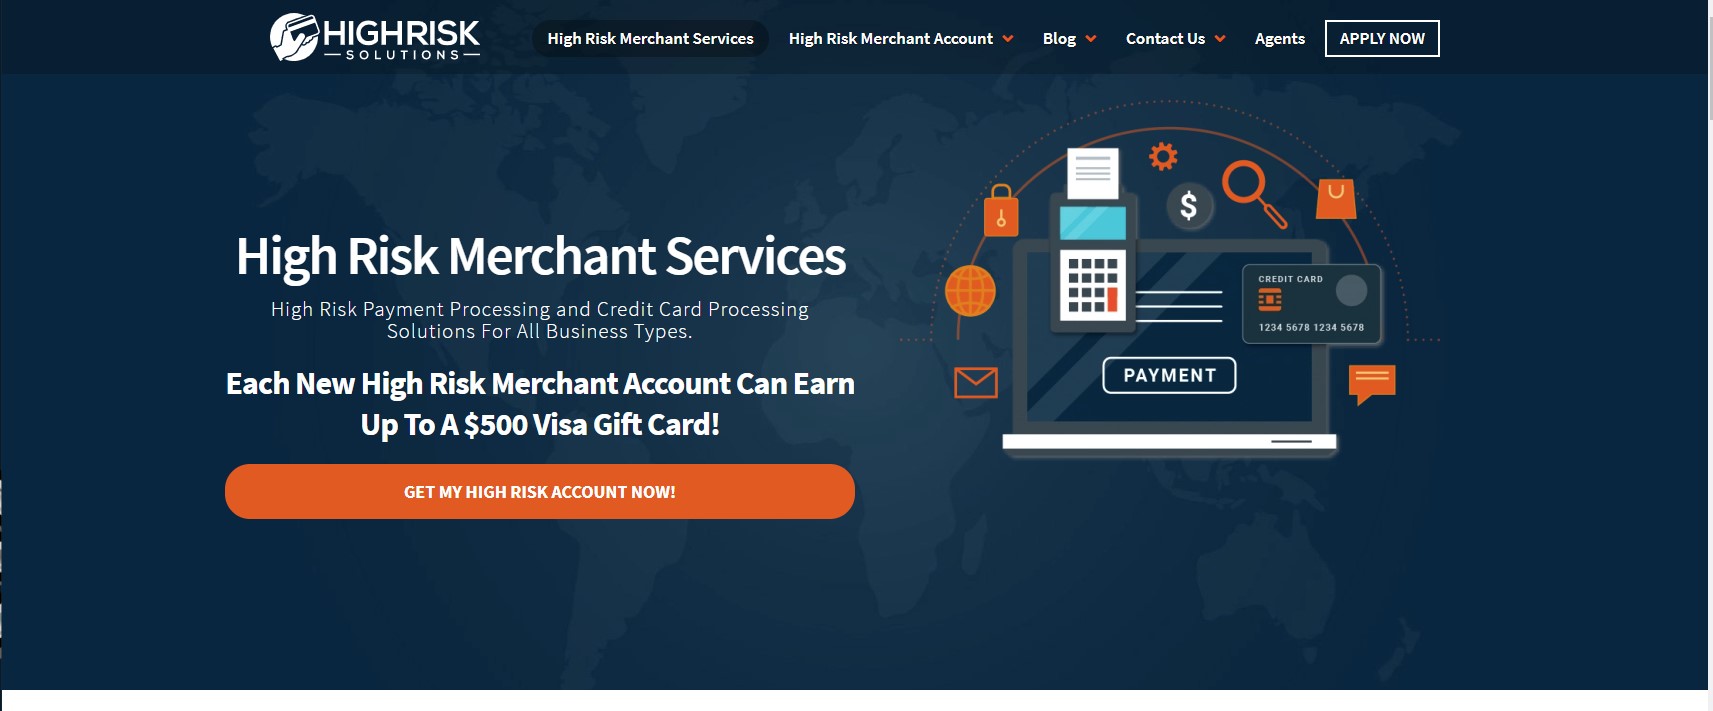 High Risk Merchant Services - Payment Gateway